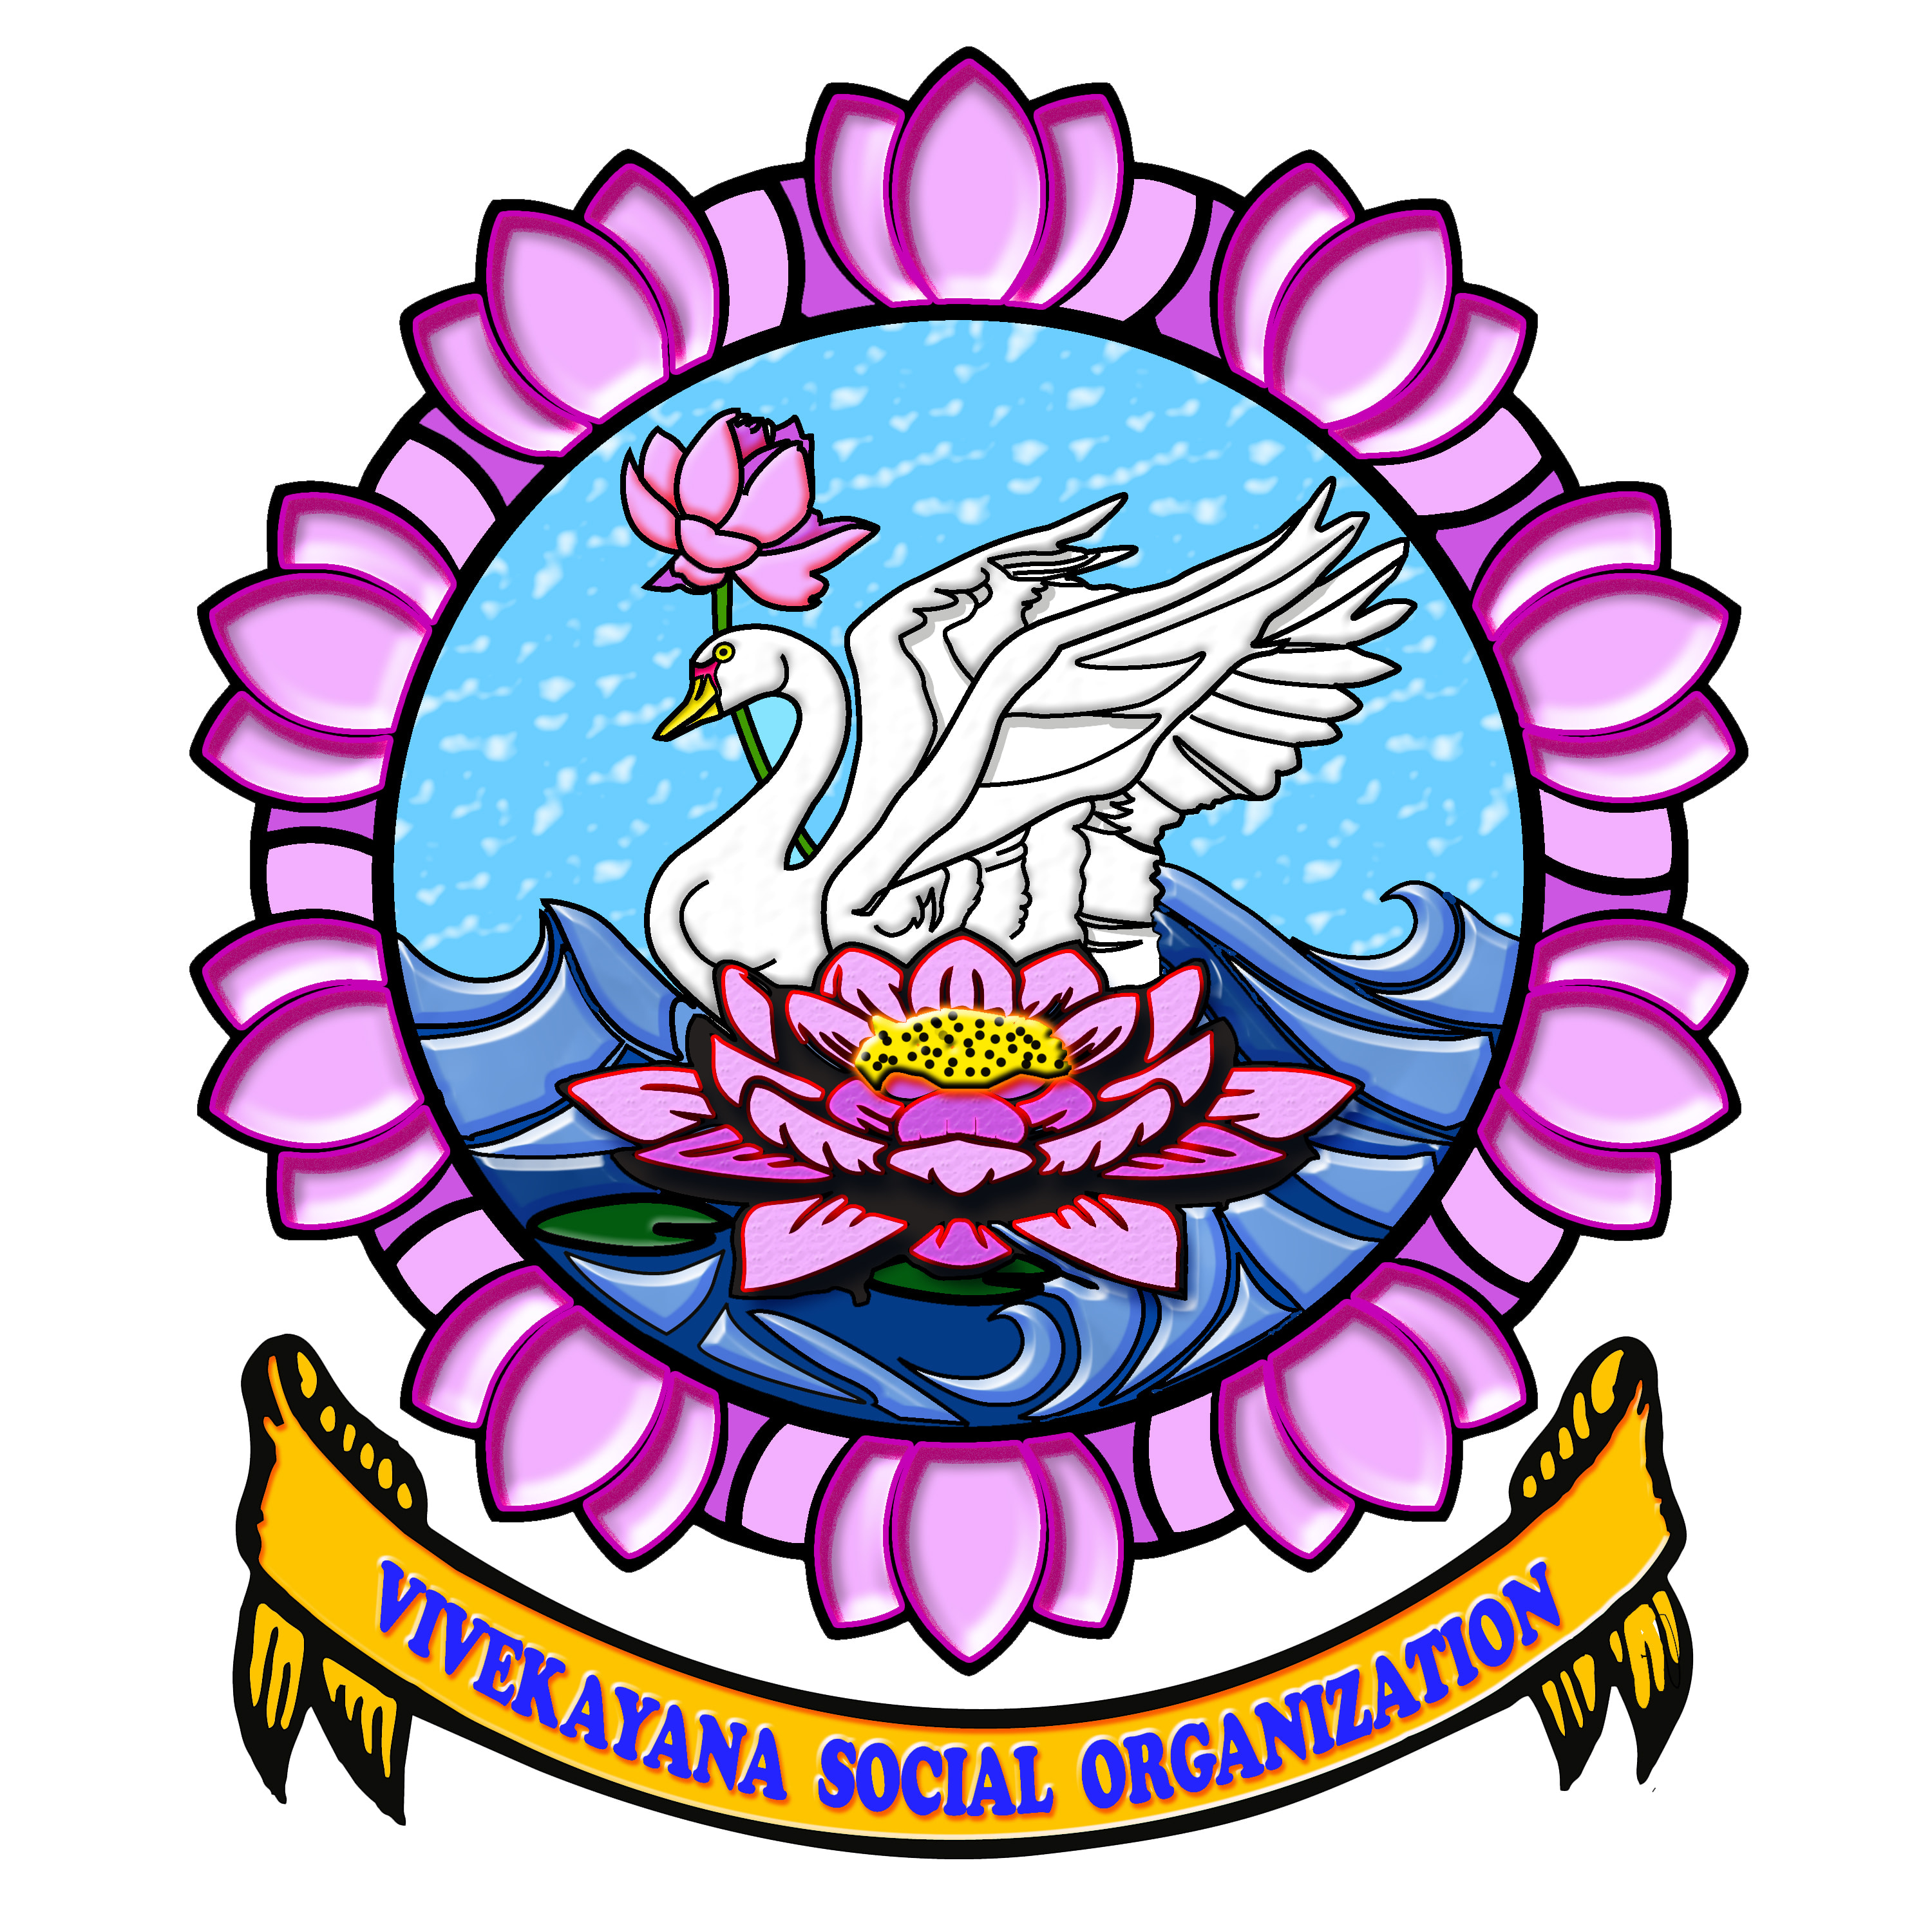 VIVEKAYANA SOCIAL ORGANIZATION